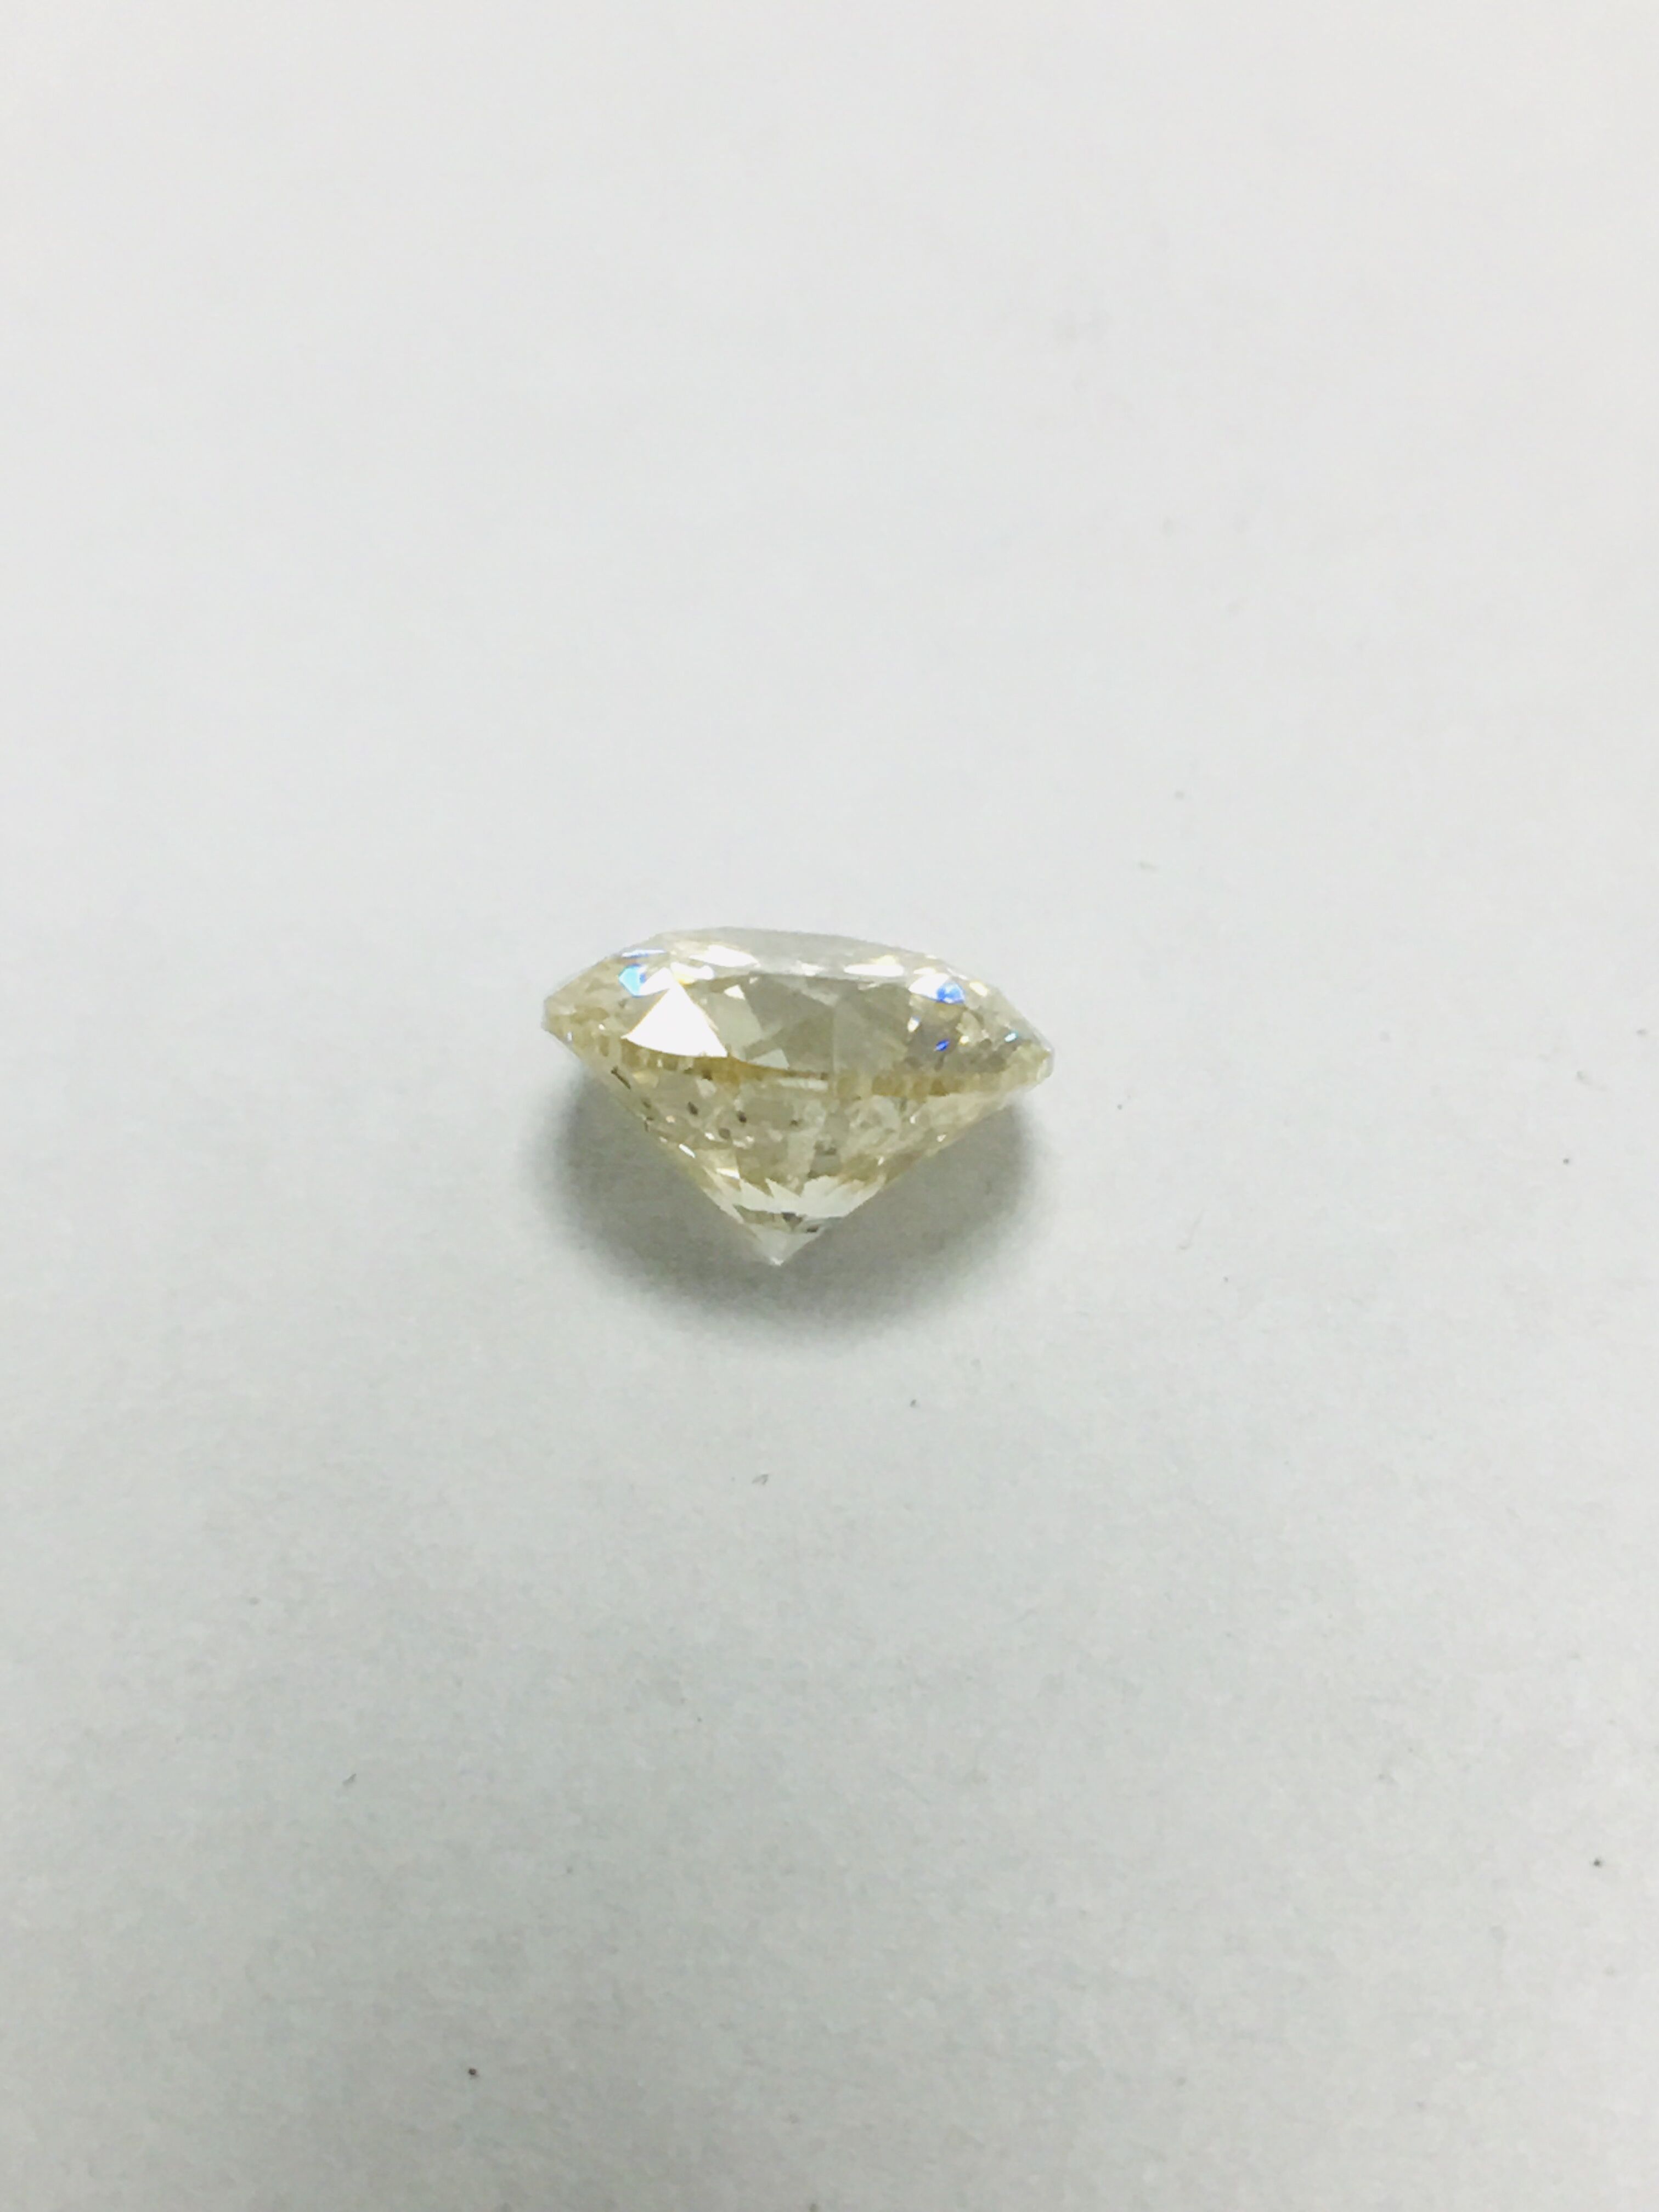 1.55ct Natural Brilliant cut DiamondSI2 clarity - Image 17 of 35